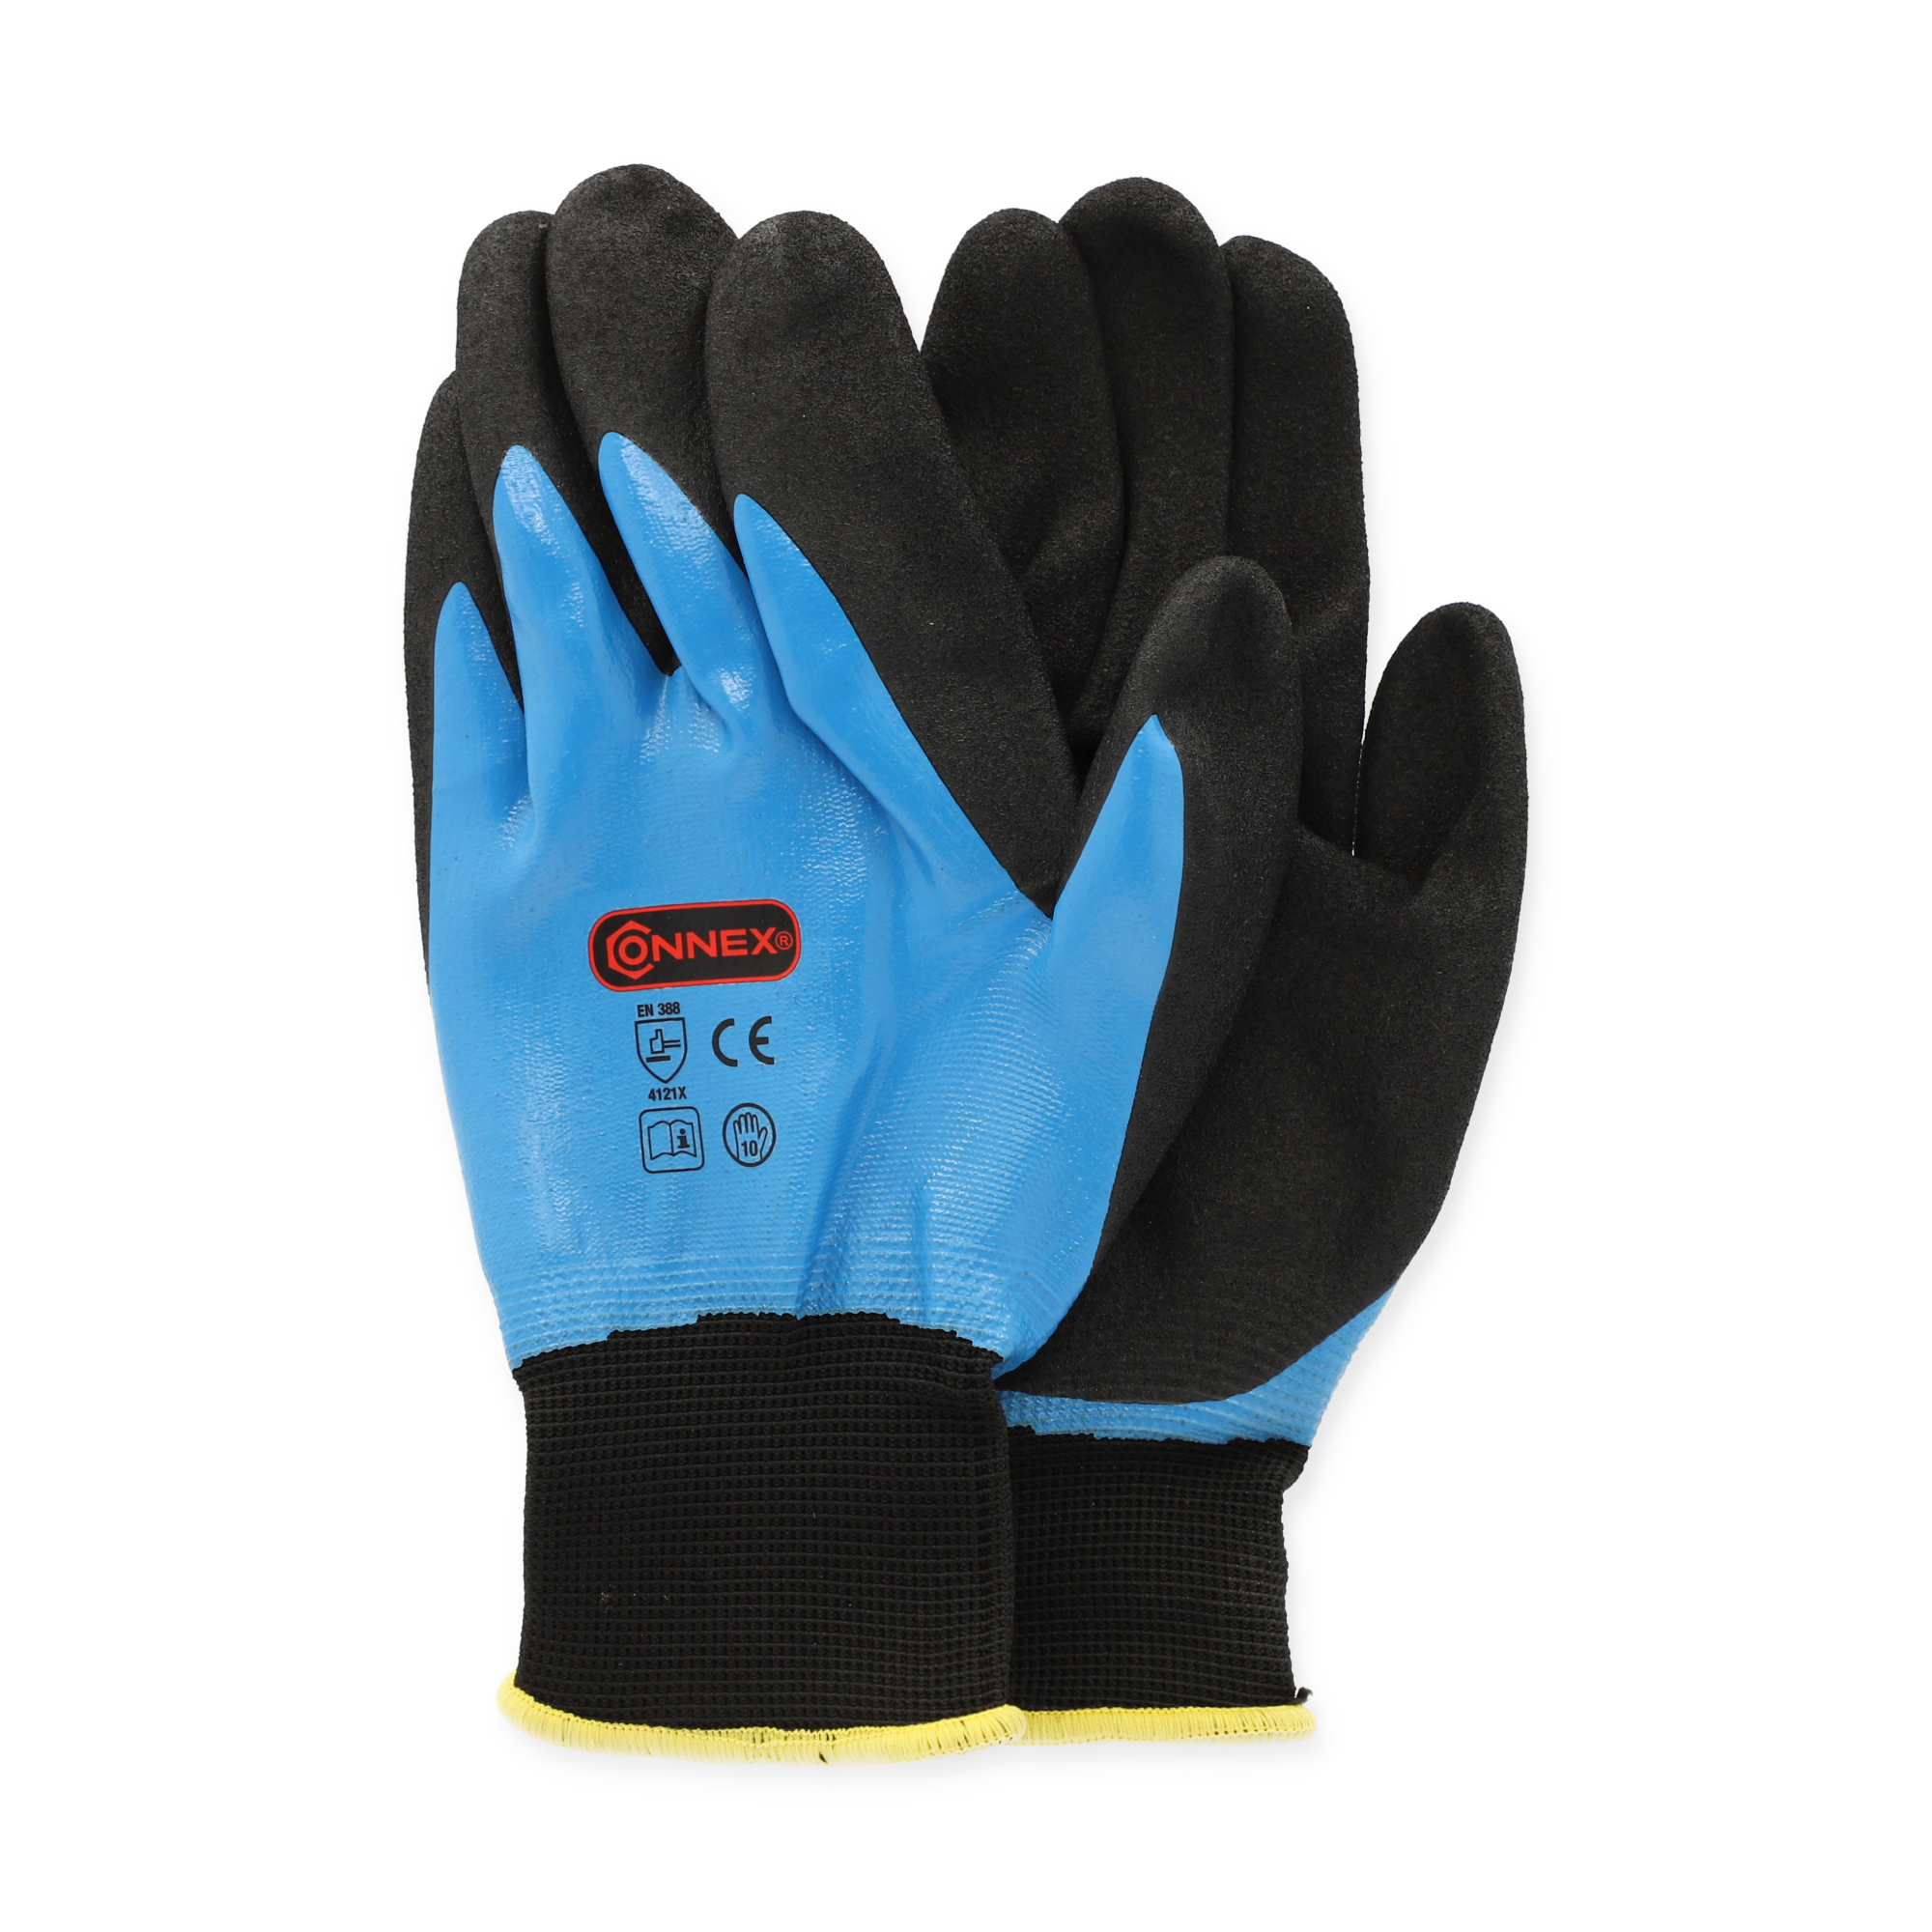 Handschuhe blau/schwarz Gr. 9 + product picture